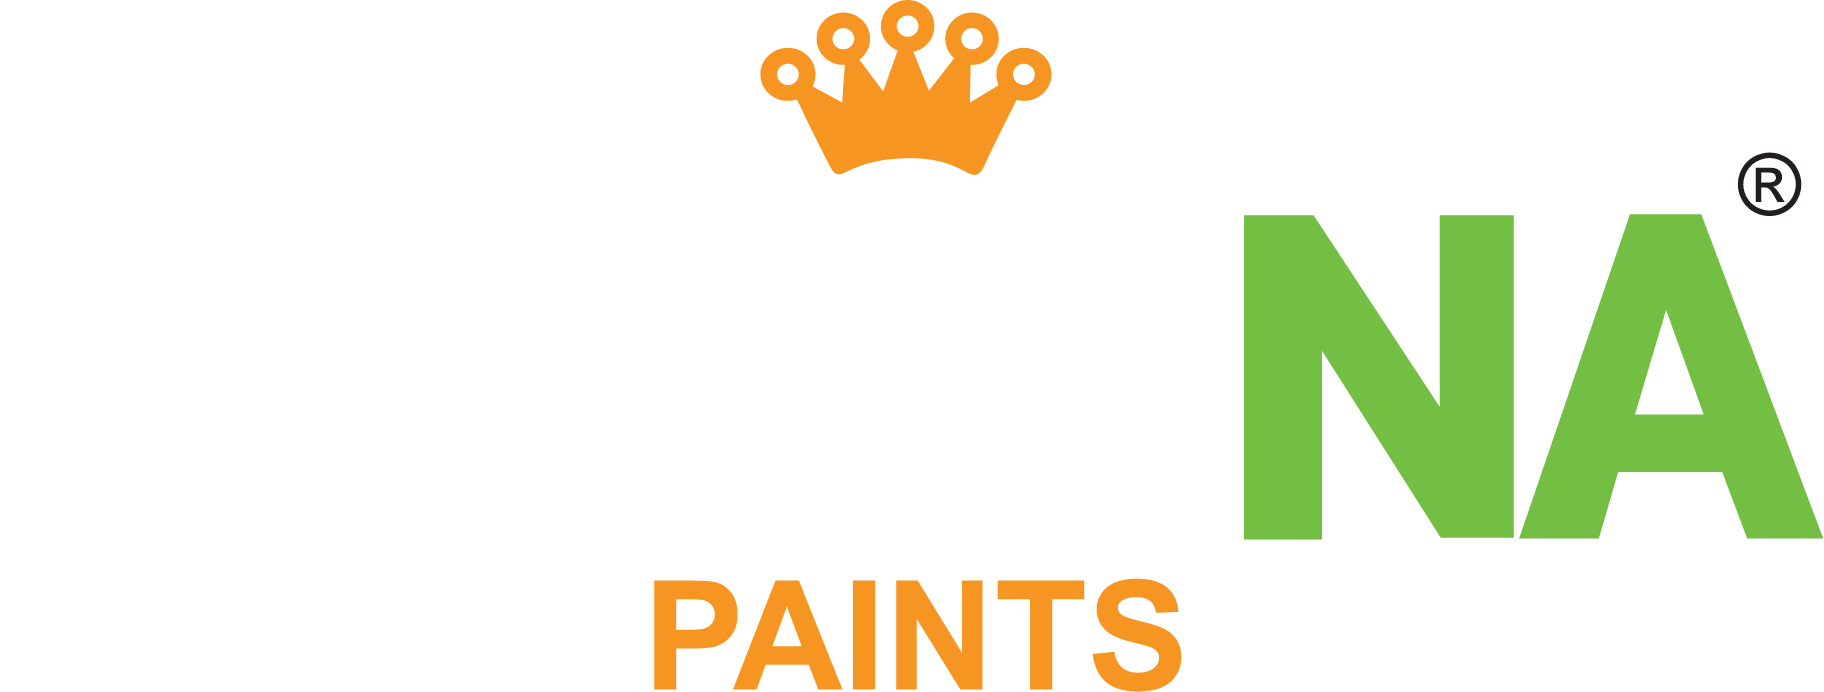 Corona Paints